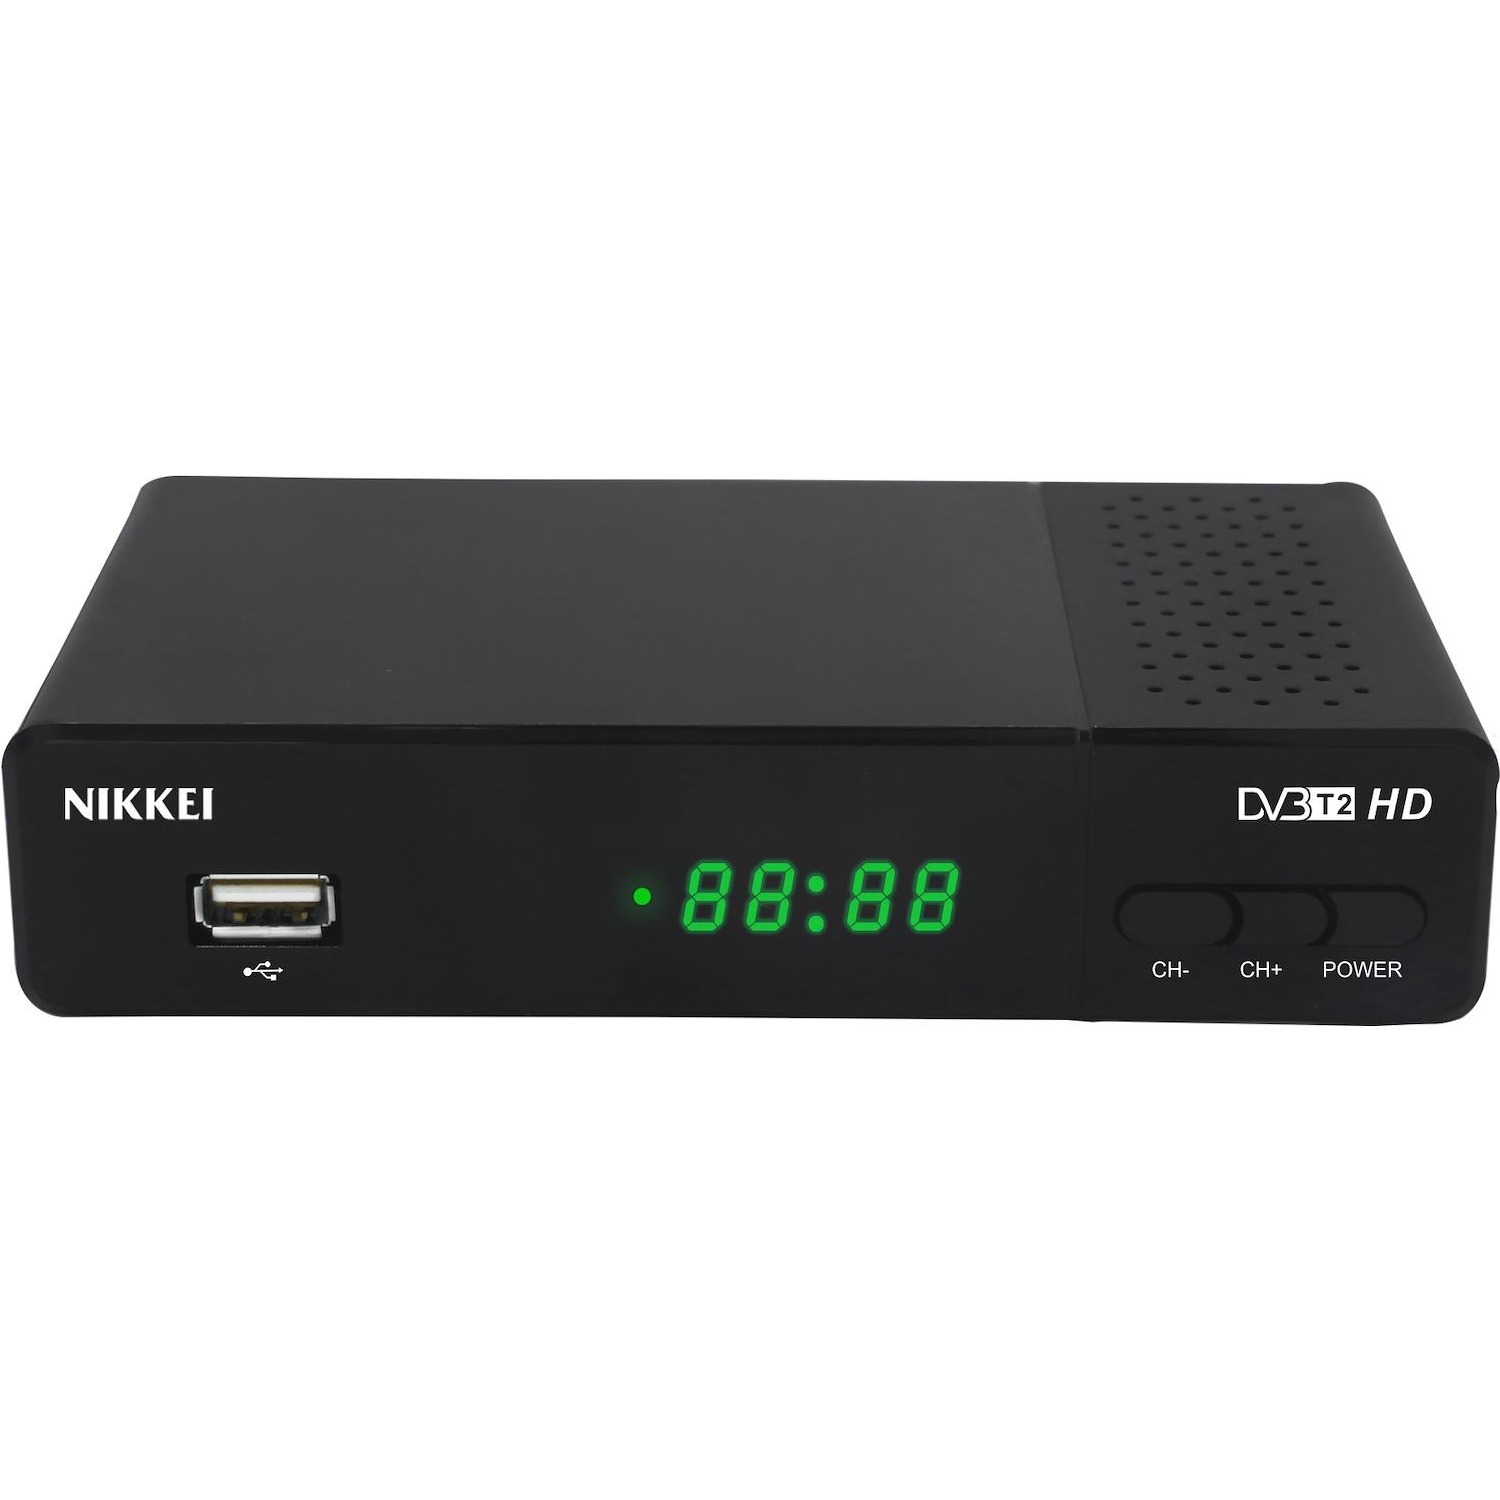 Immagine per Decoder DVB-T2 Nikkei NIDVBH3100 da DIMOStore